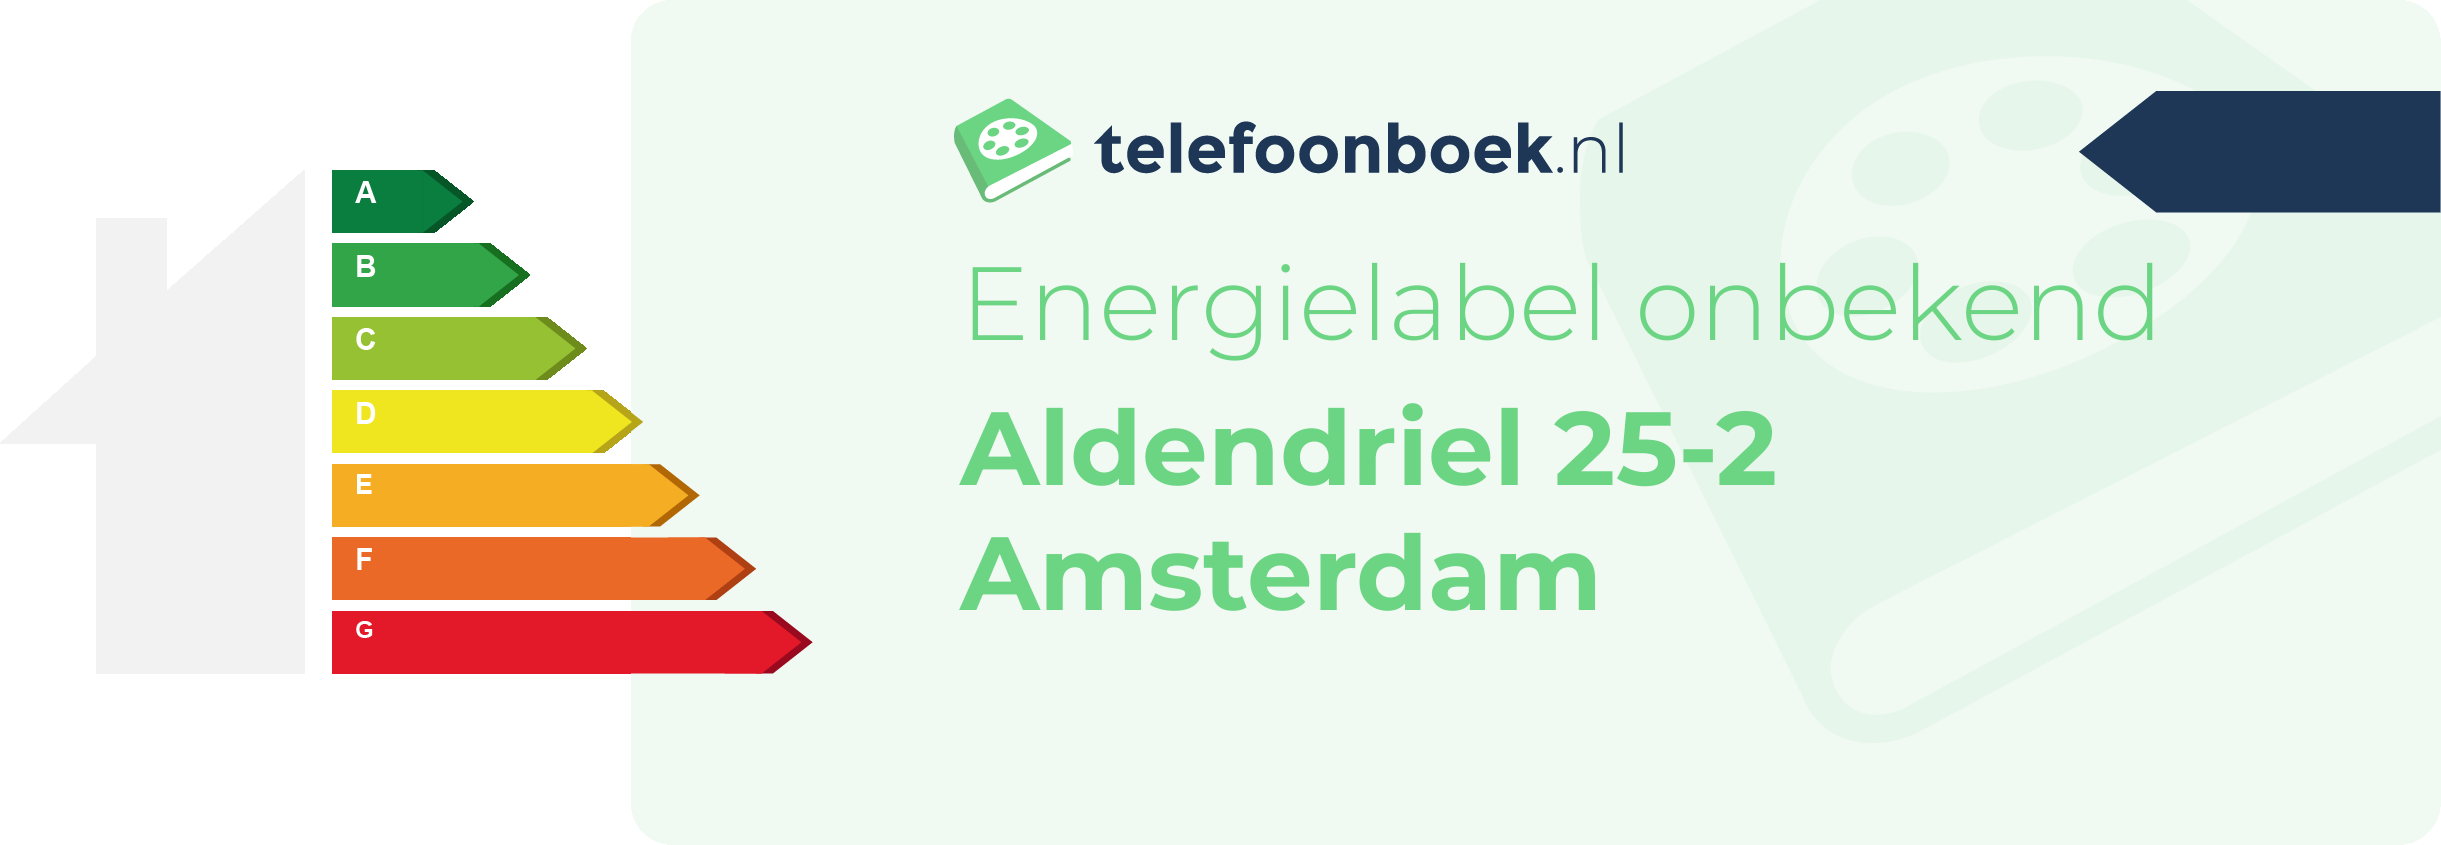 Energielabel Aldendriel 25-2 Amsterdam